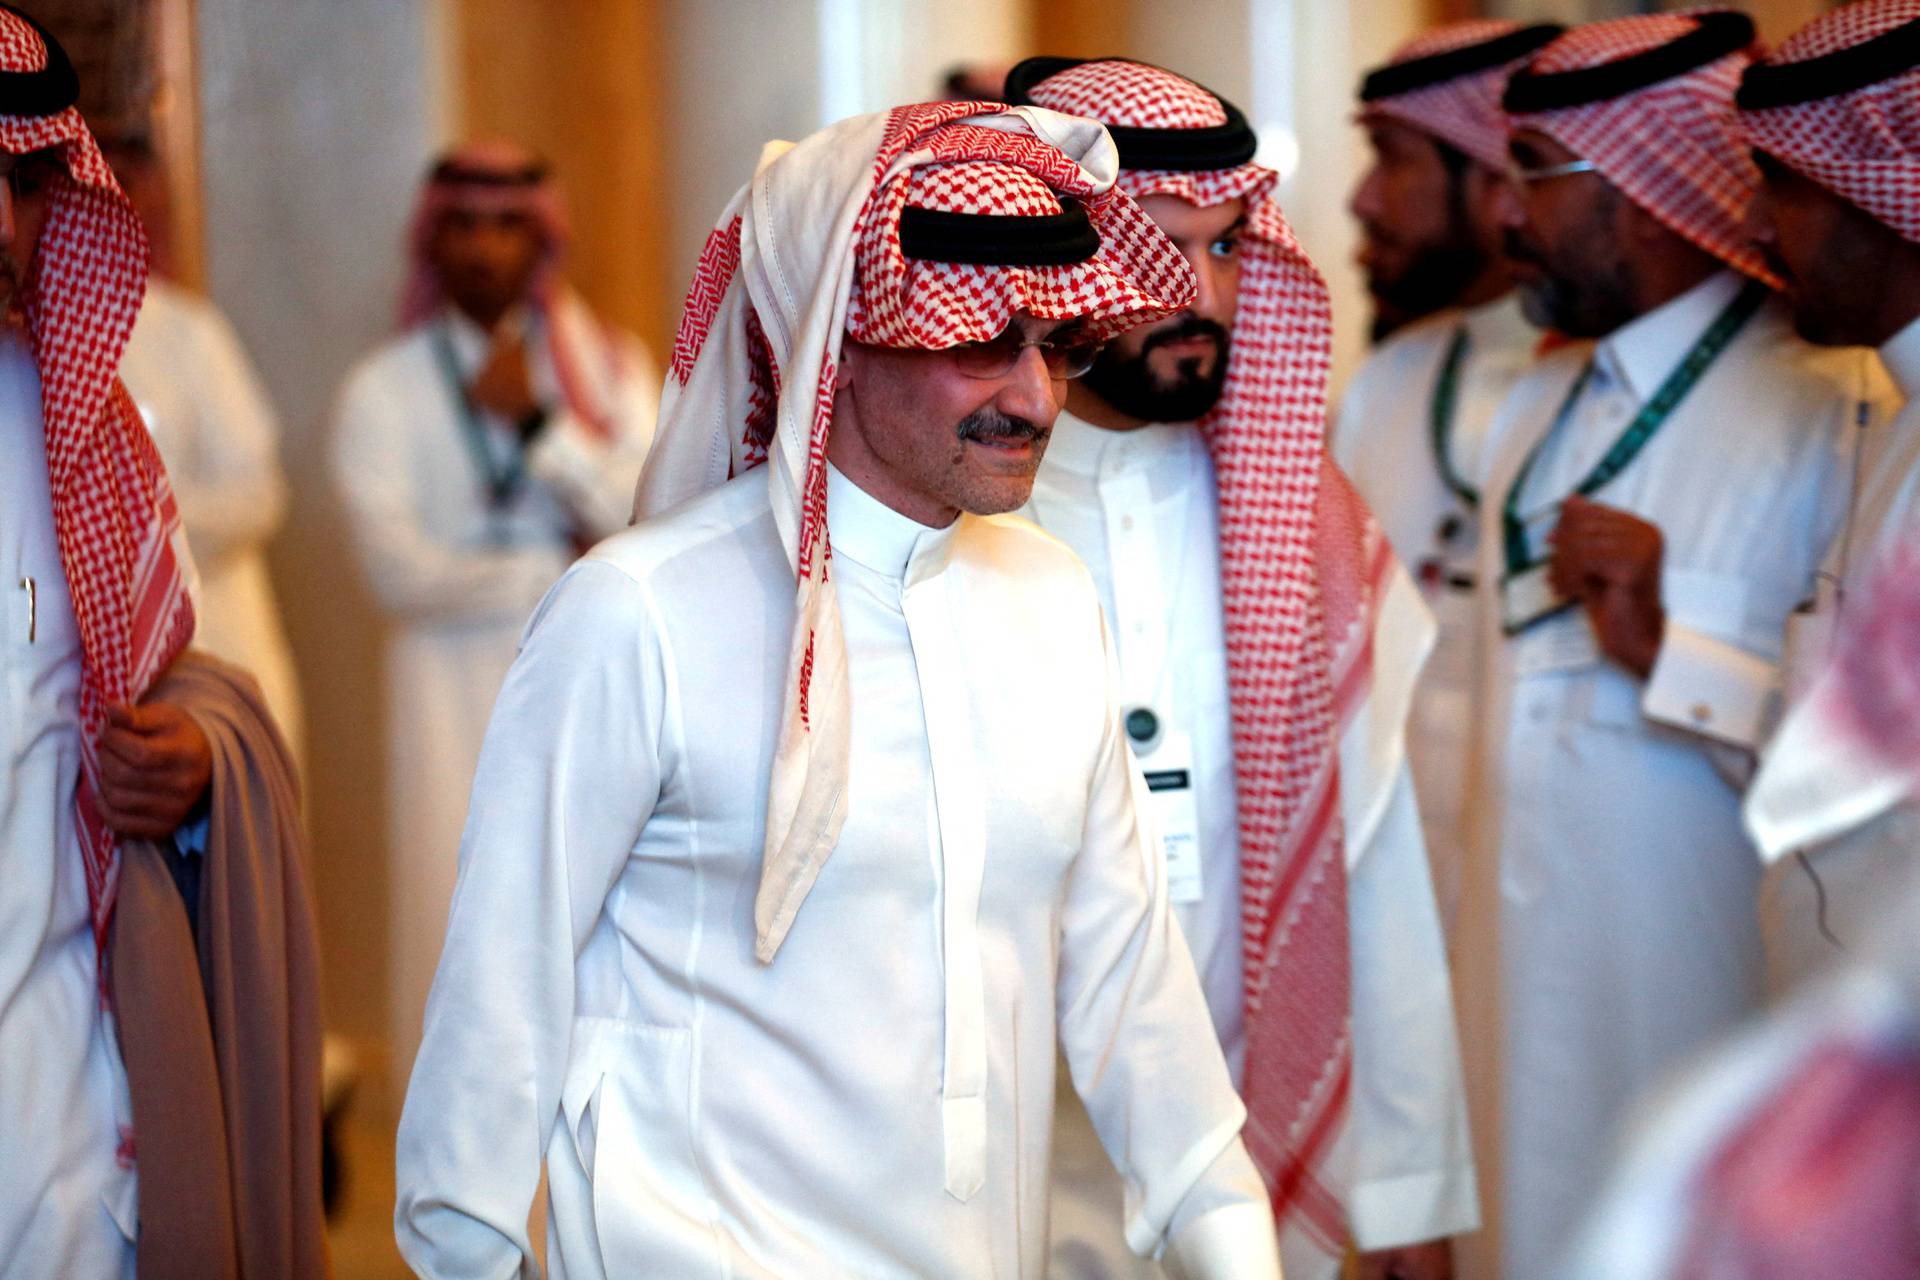 FILE PHOTO: Saudi Arabian billionaire Prince Alwaleed bin Talal attends an investment conference in Riyadh